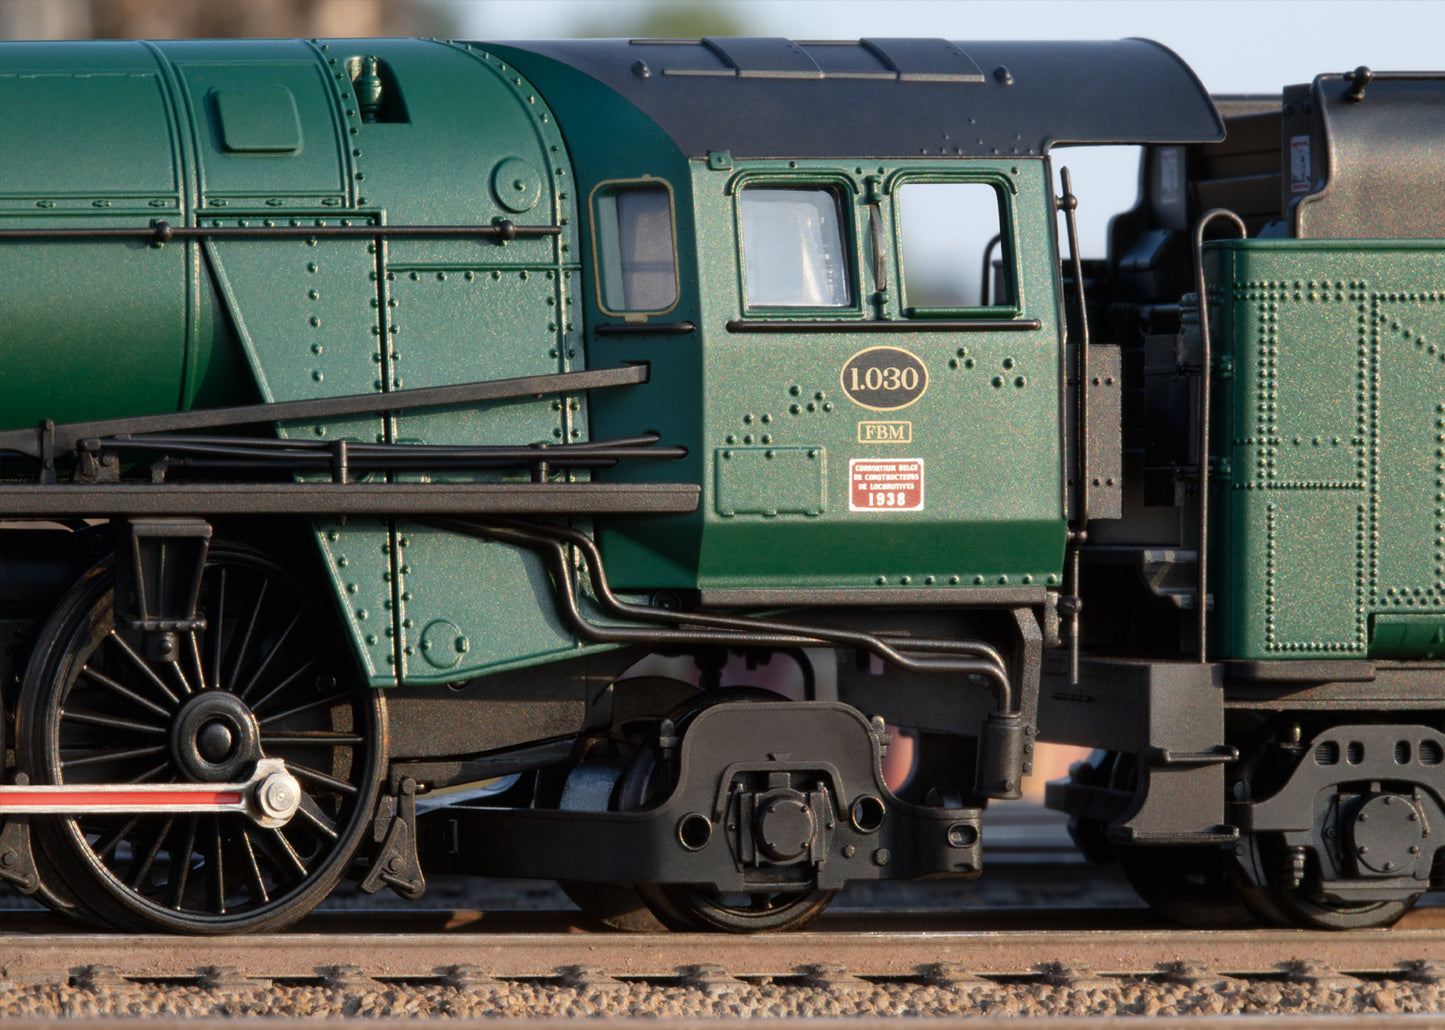 Trix 25480 - Cl 1 steam locomotive SNCB